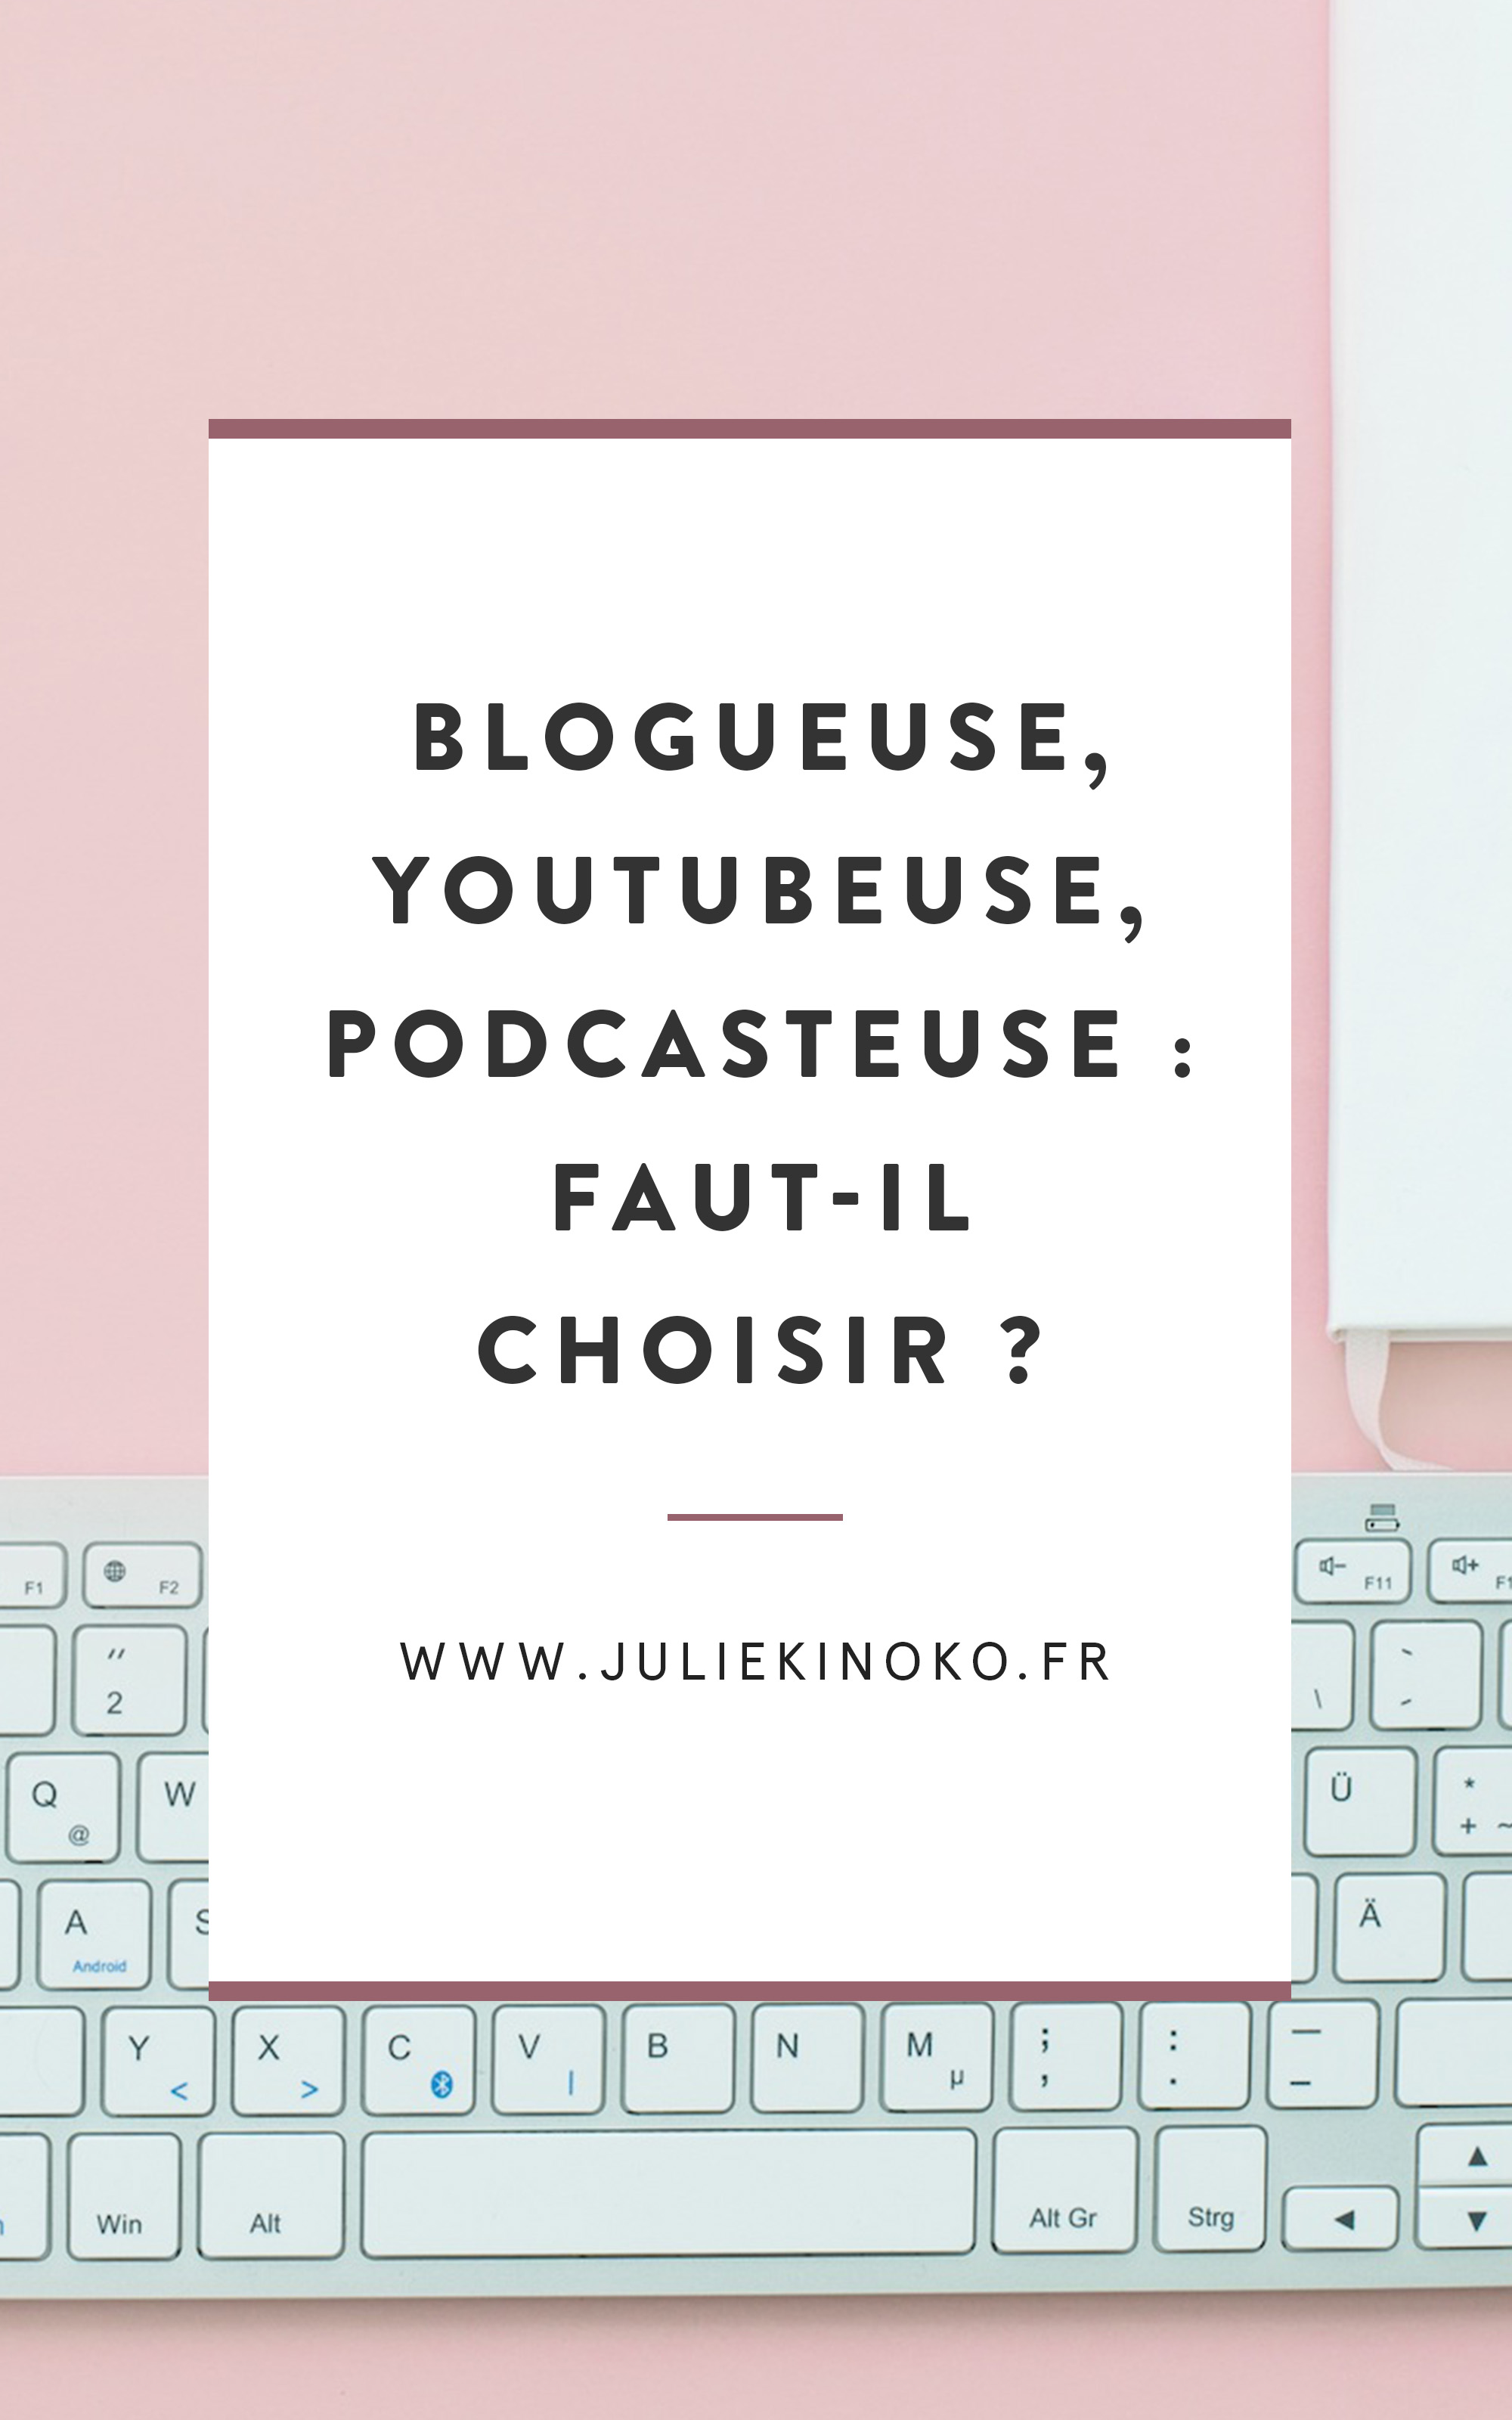 #7 Blogueuse, Youtubeuse, Podcasteuse : faut-il choisir ?